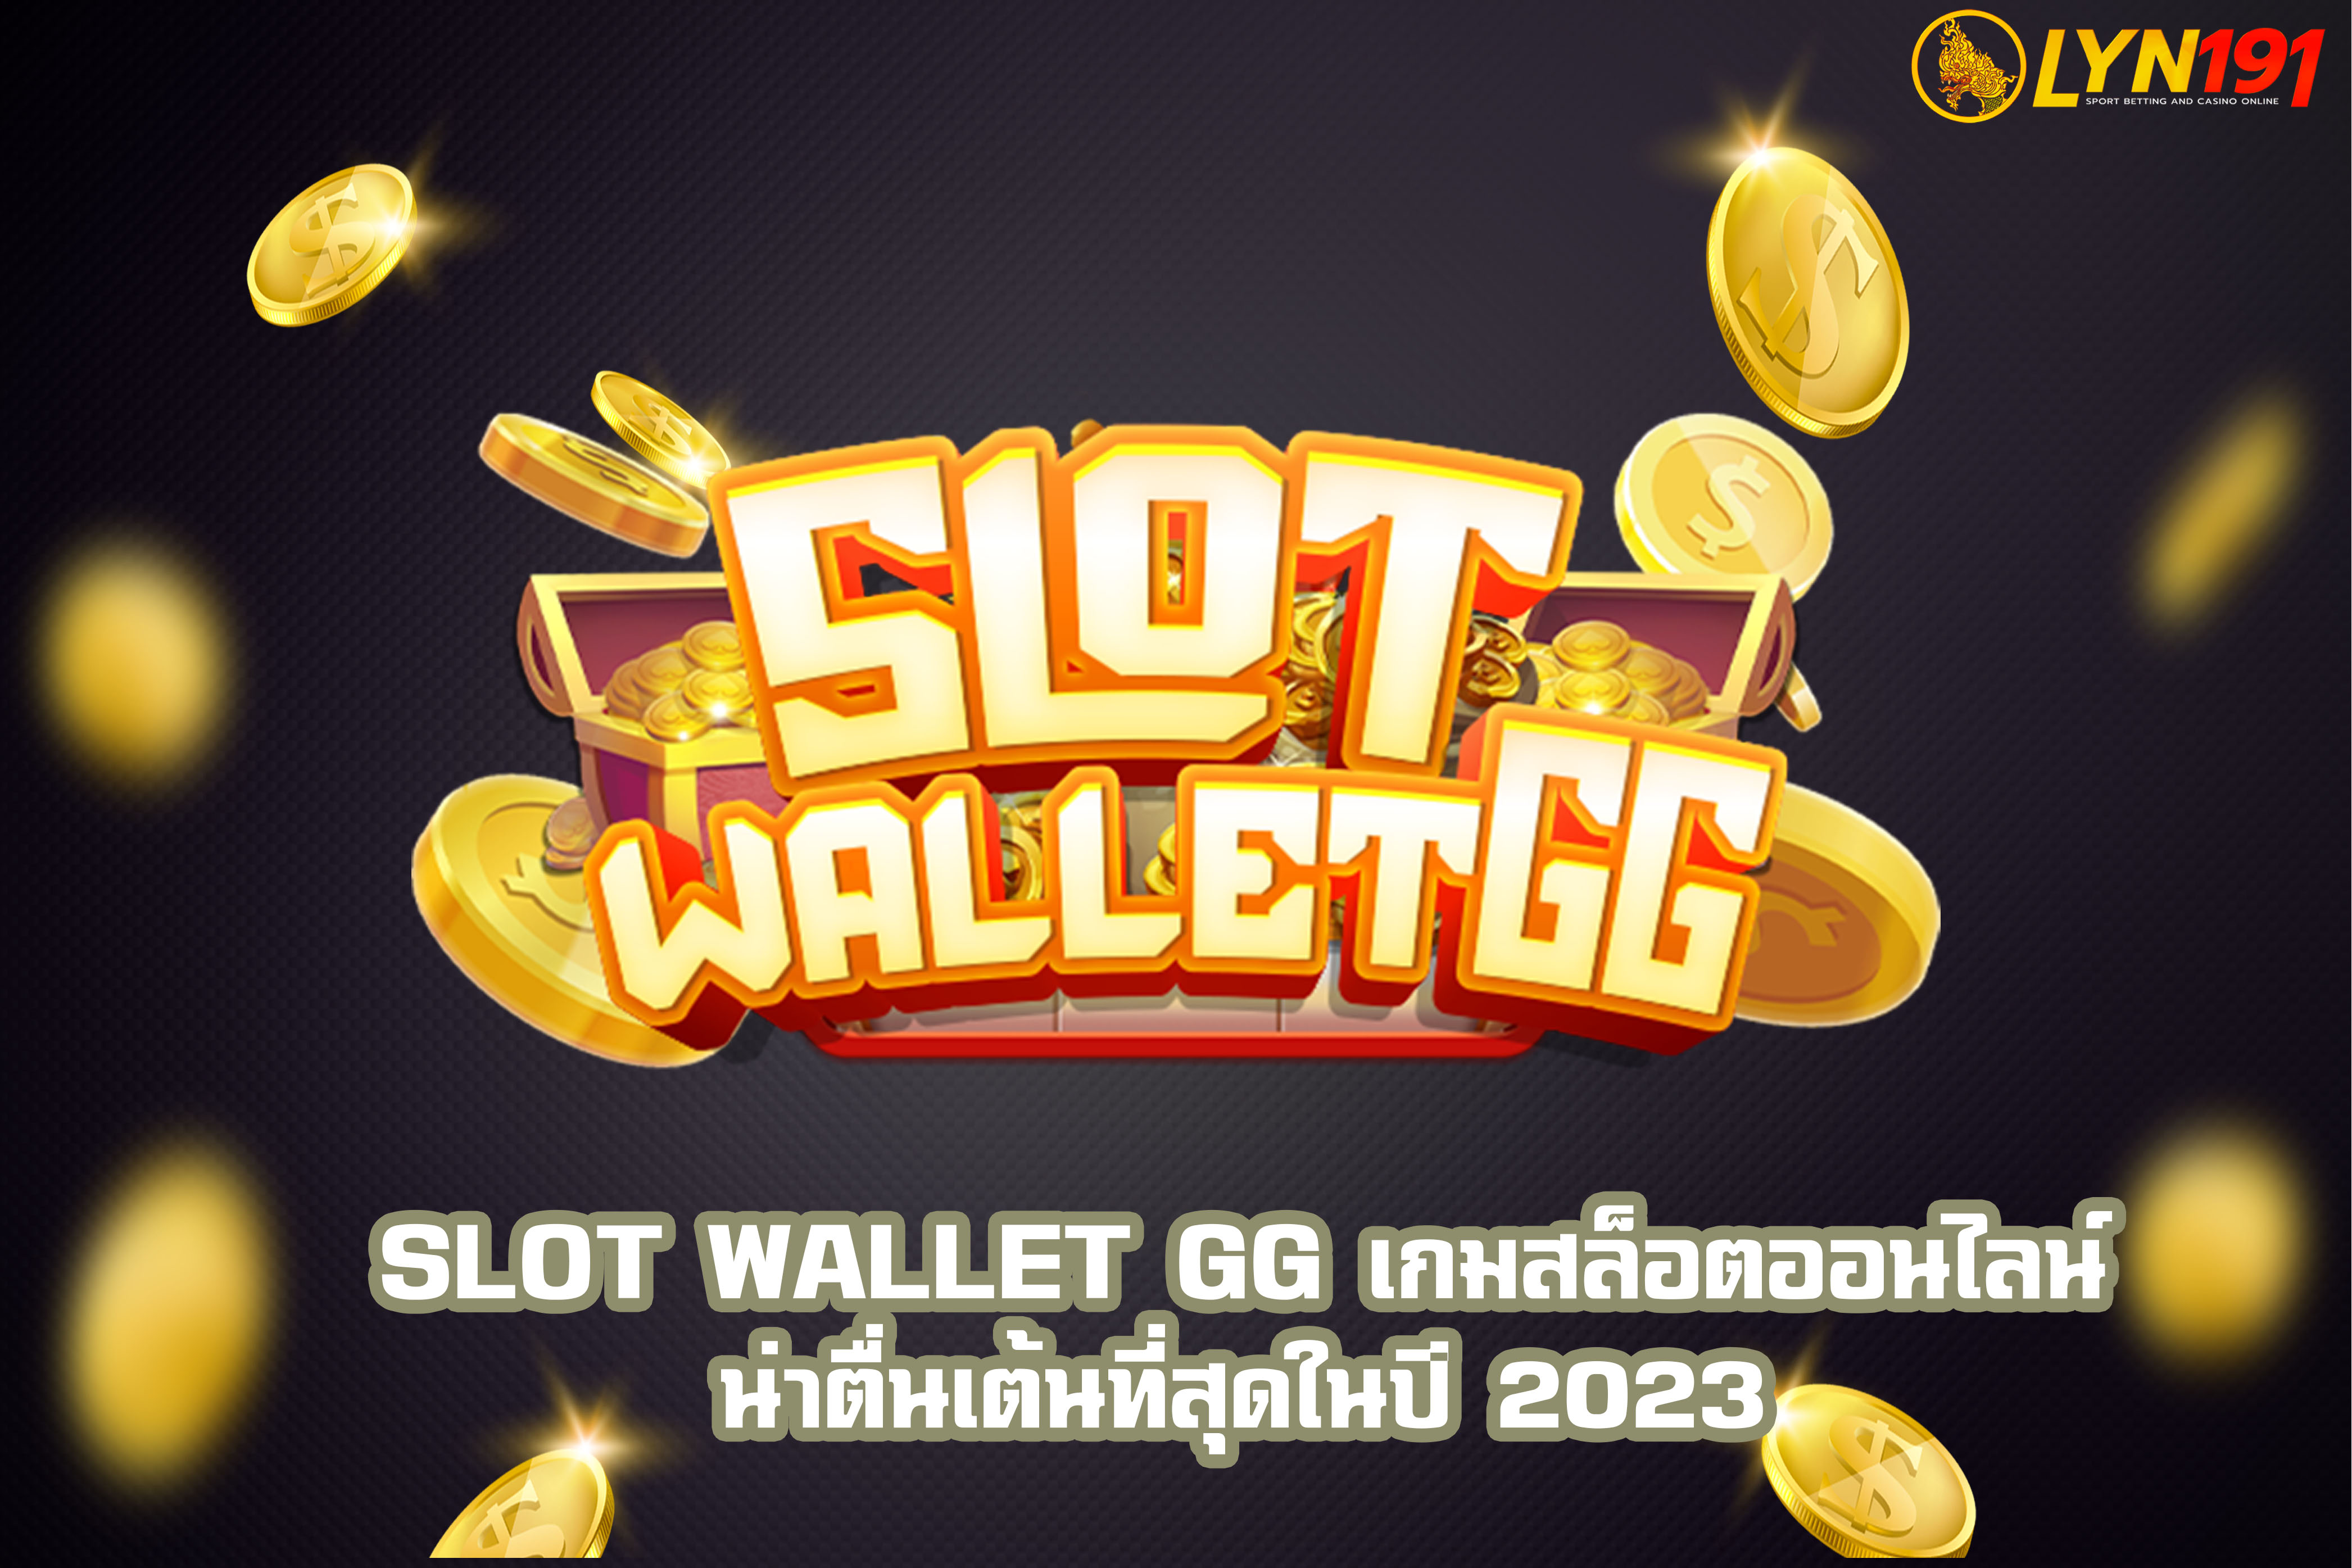 SLOT Wallet GG